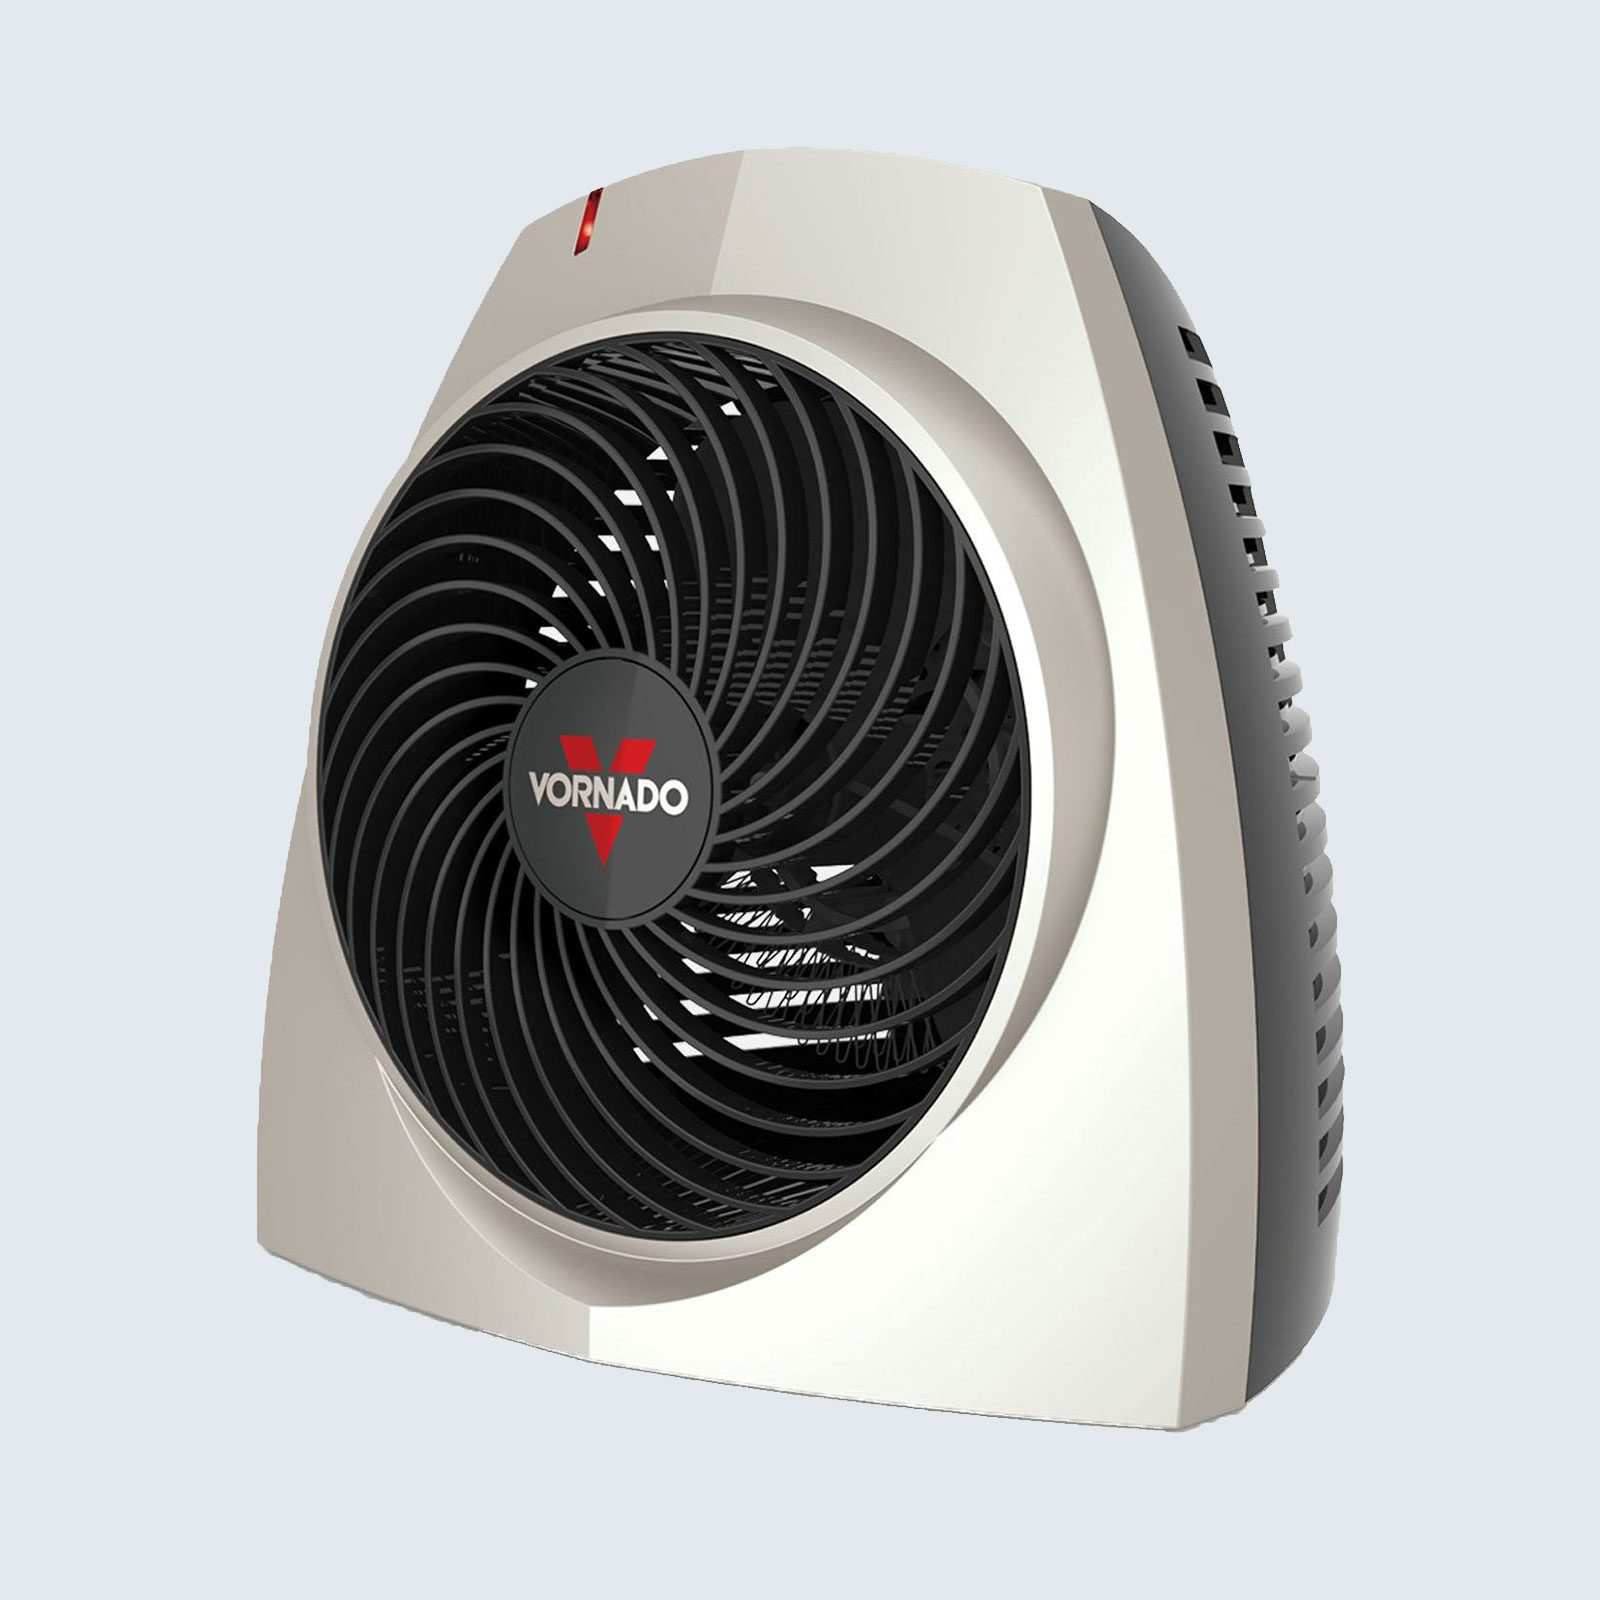 Vornado VH200 Personal Space Heater